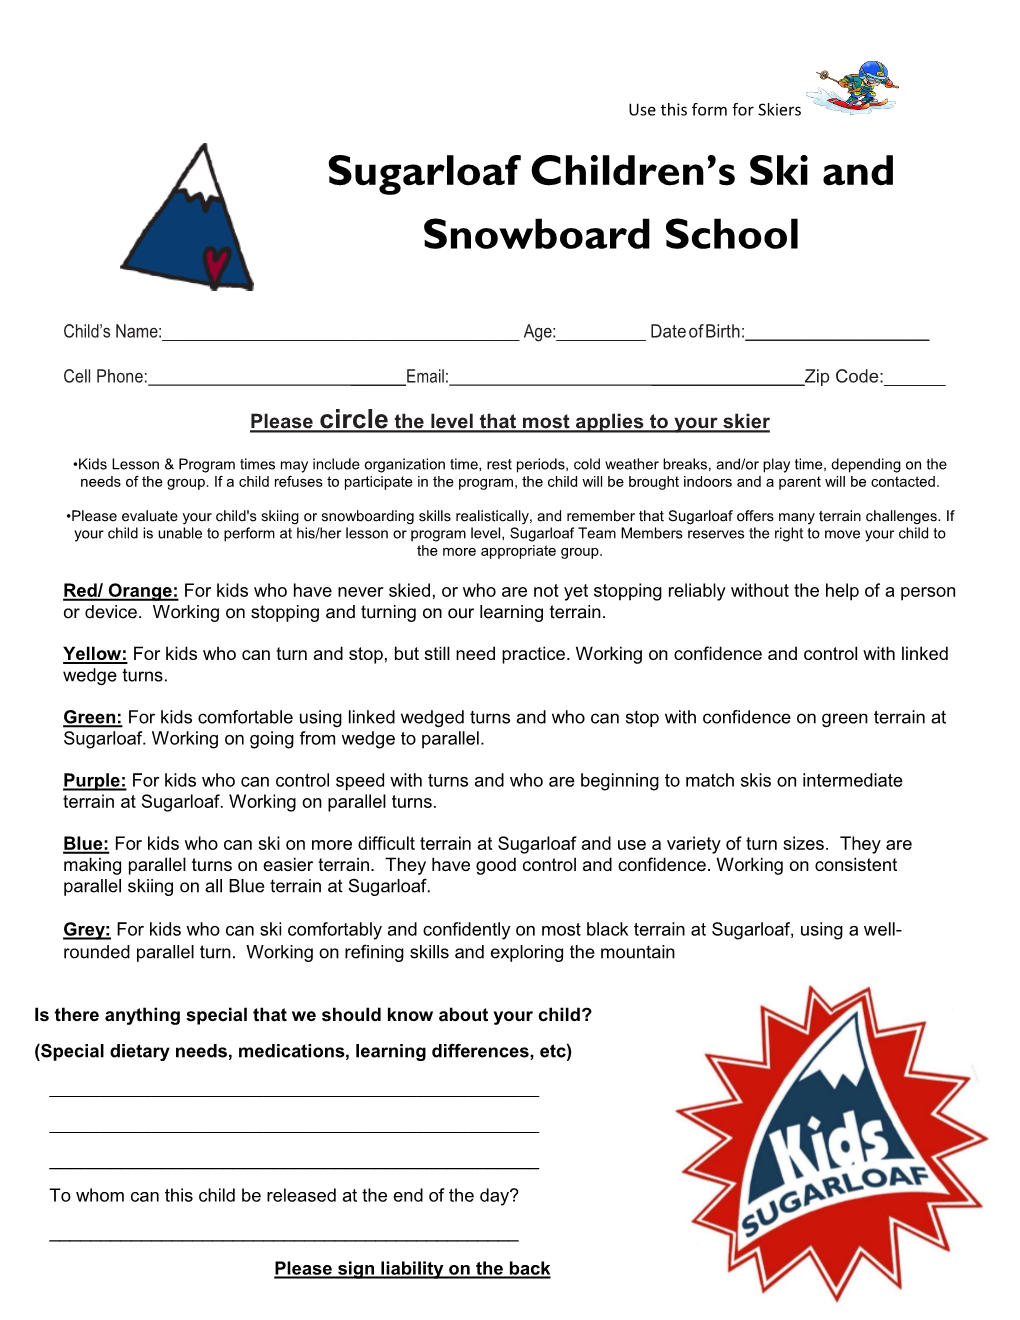 Sugarloaf Children's Ski and Snowboard School